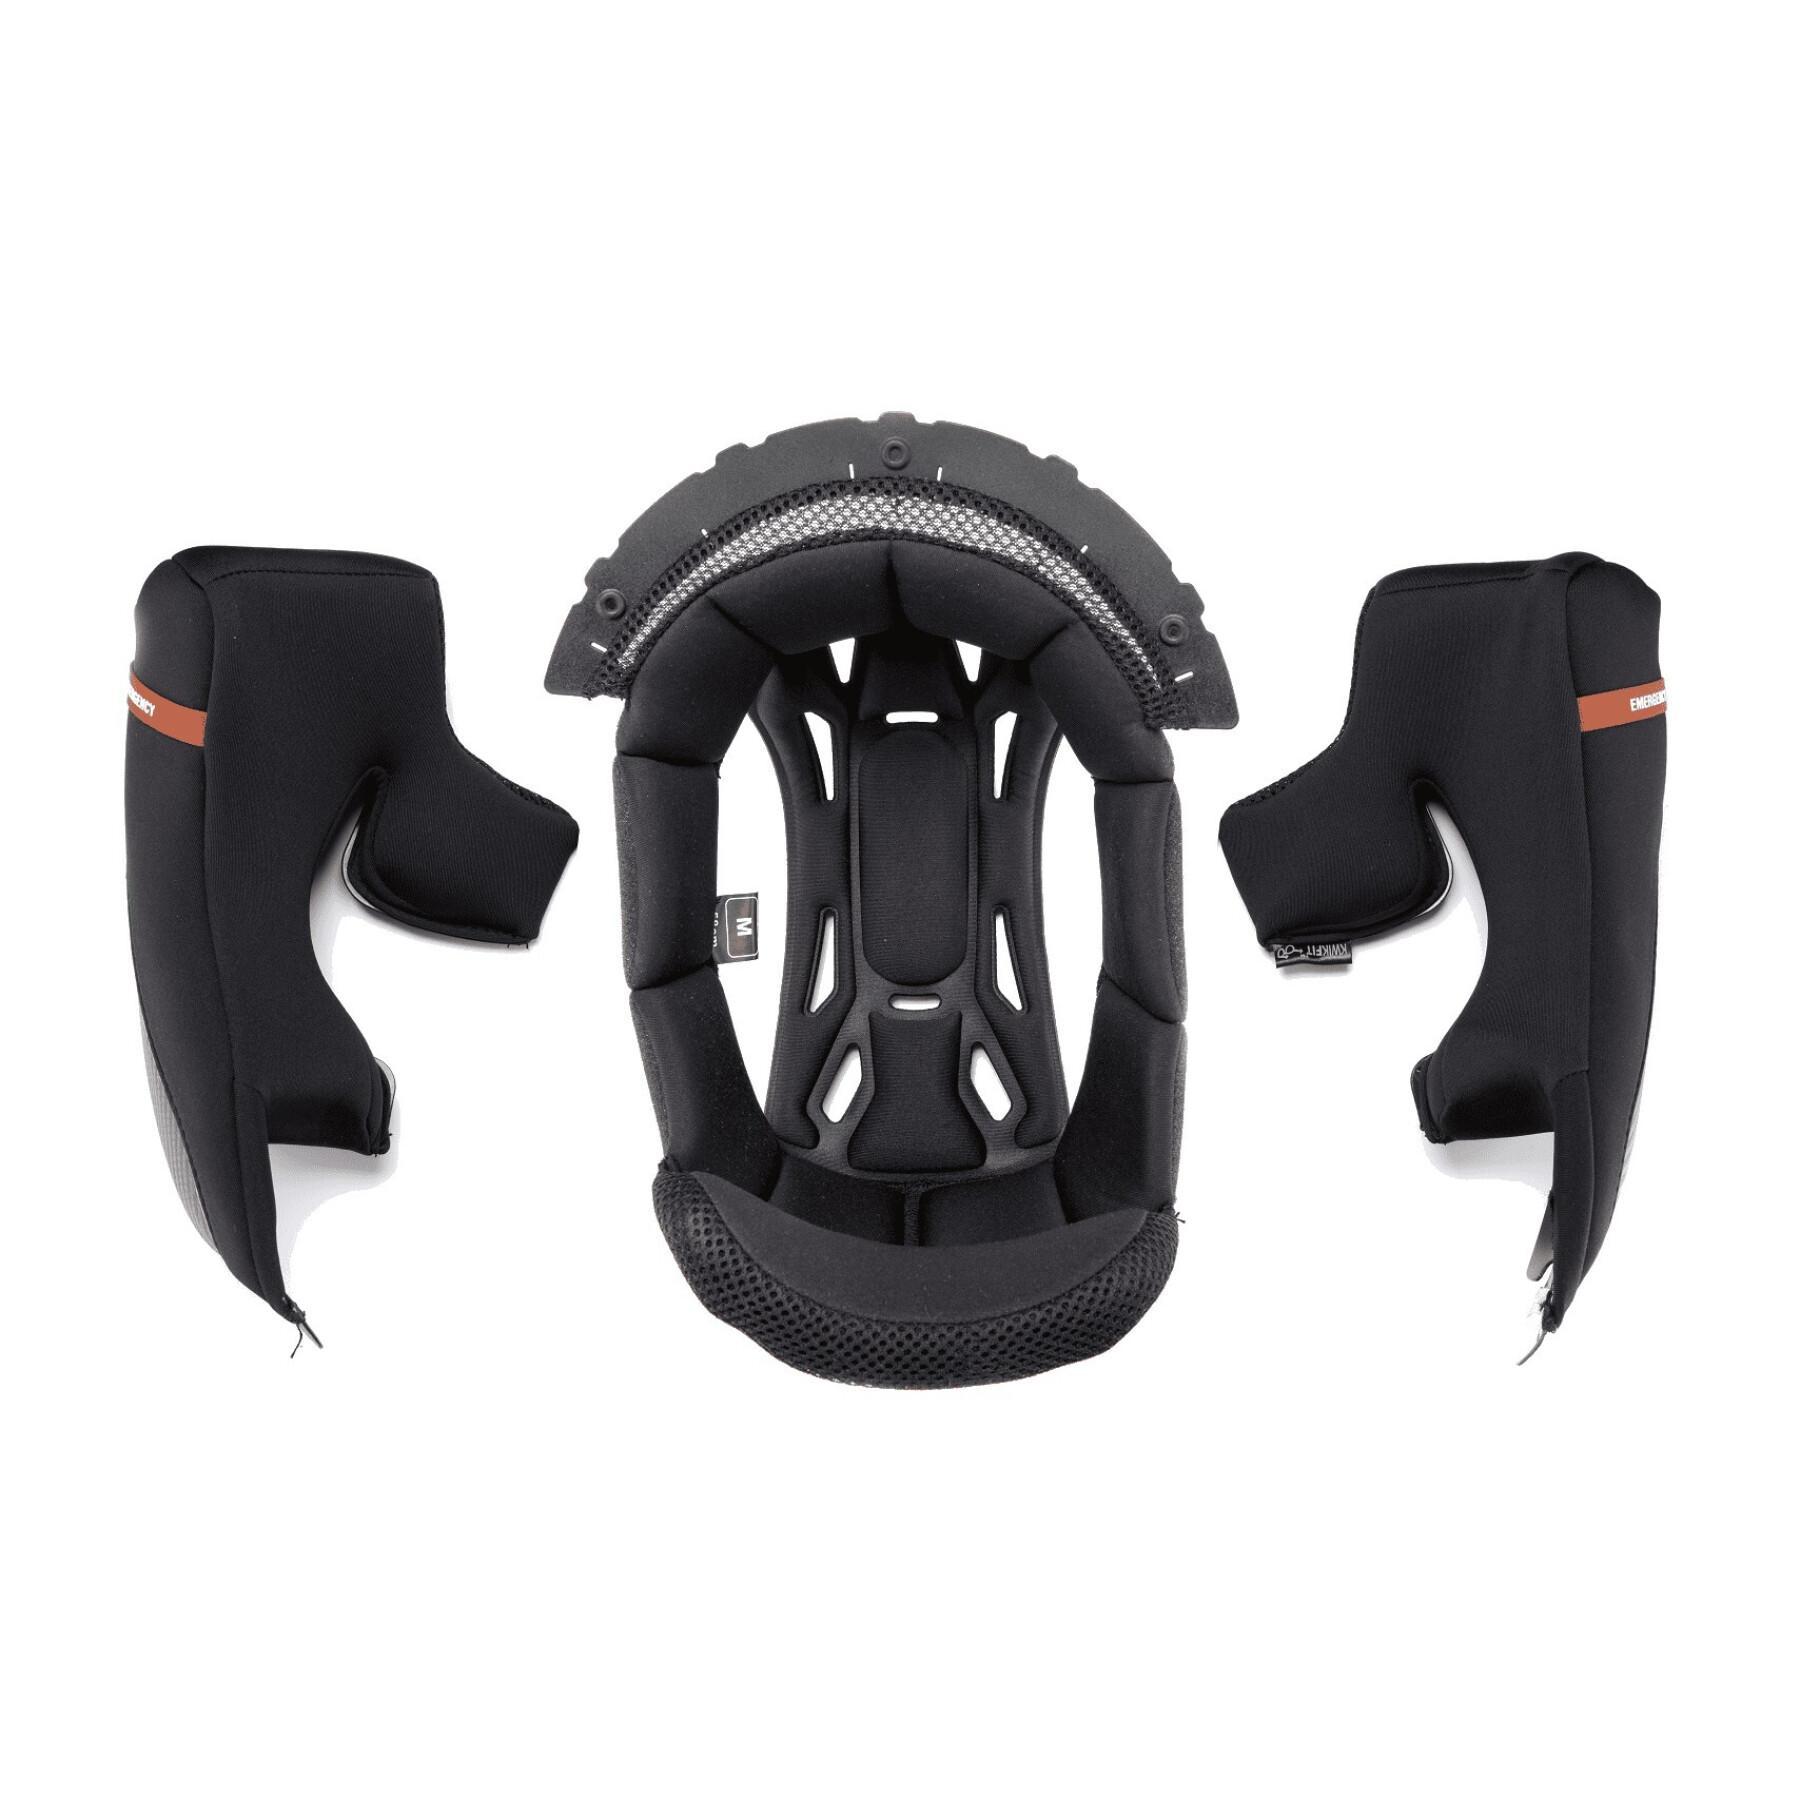 Standard motorcycle helmet foam Scorpion ADX-1 / EXO-920 Evo KW